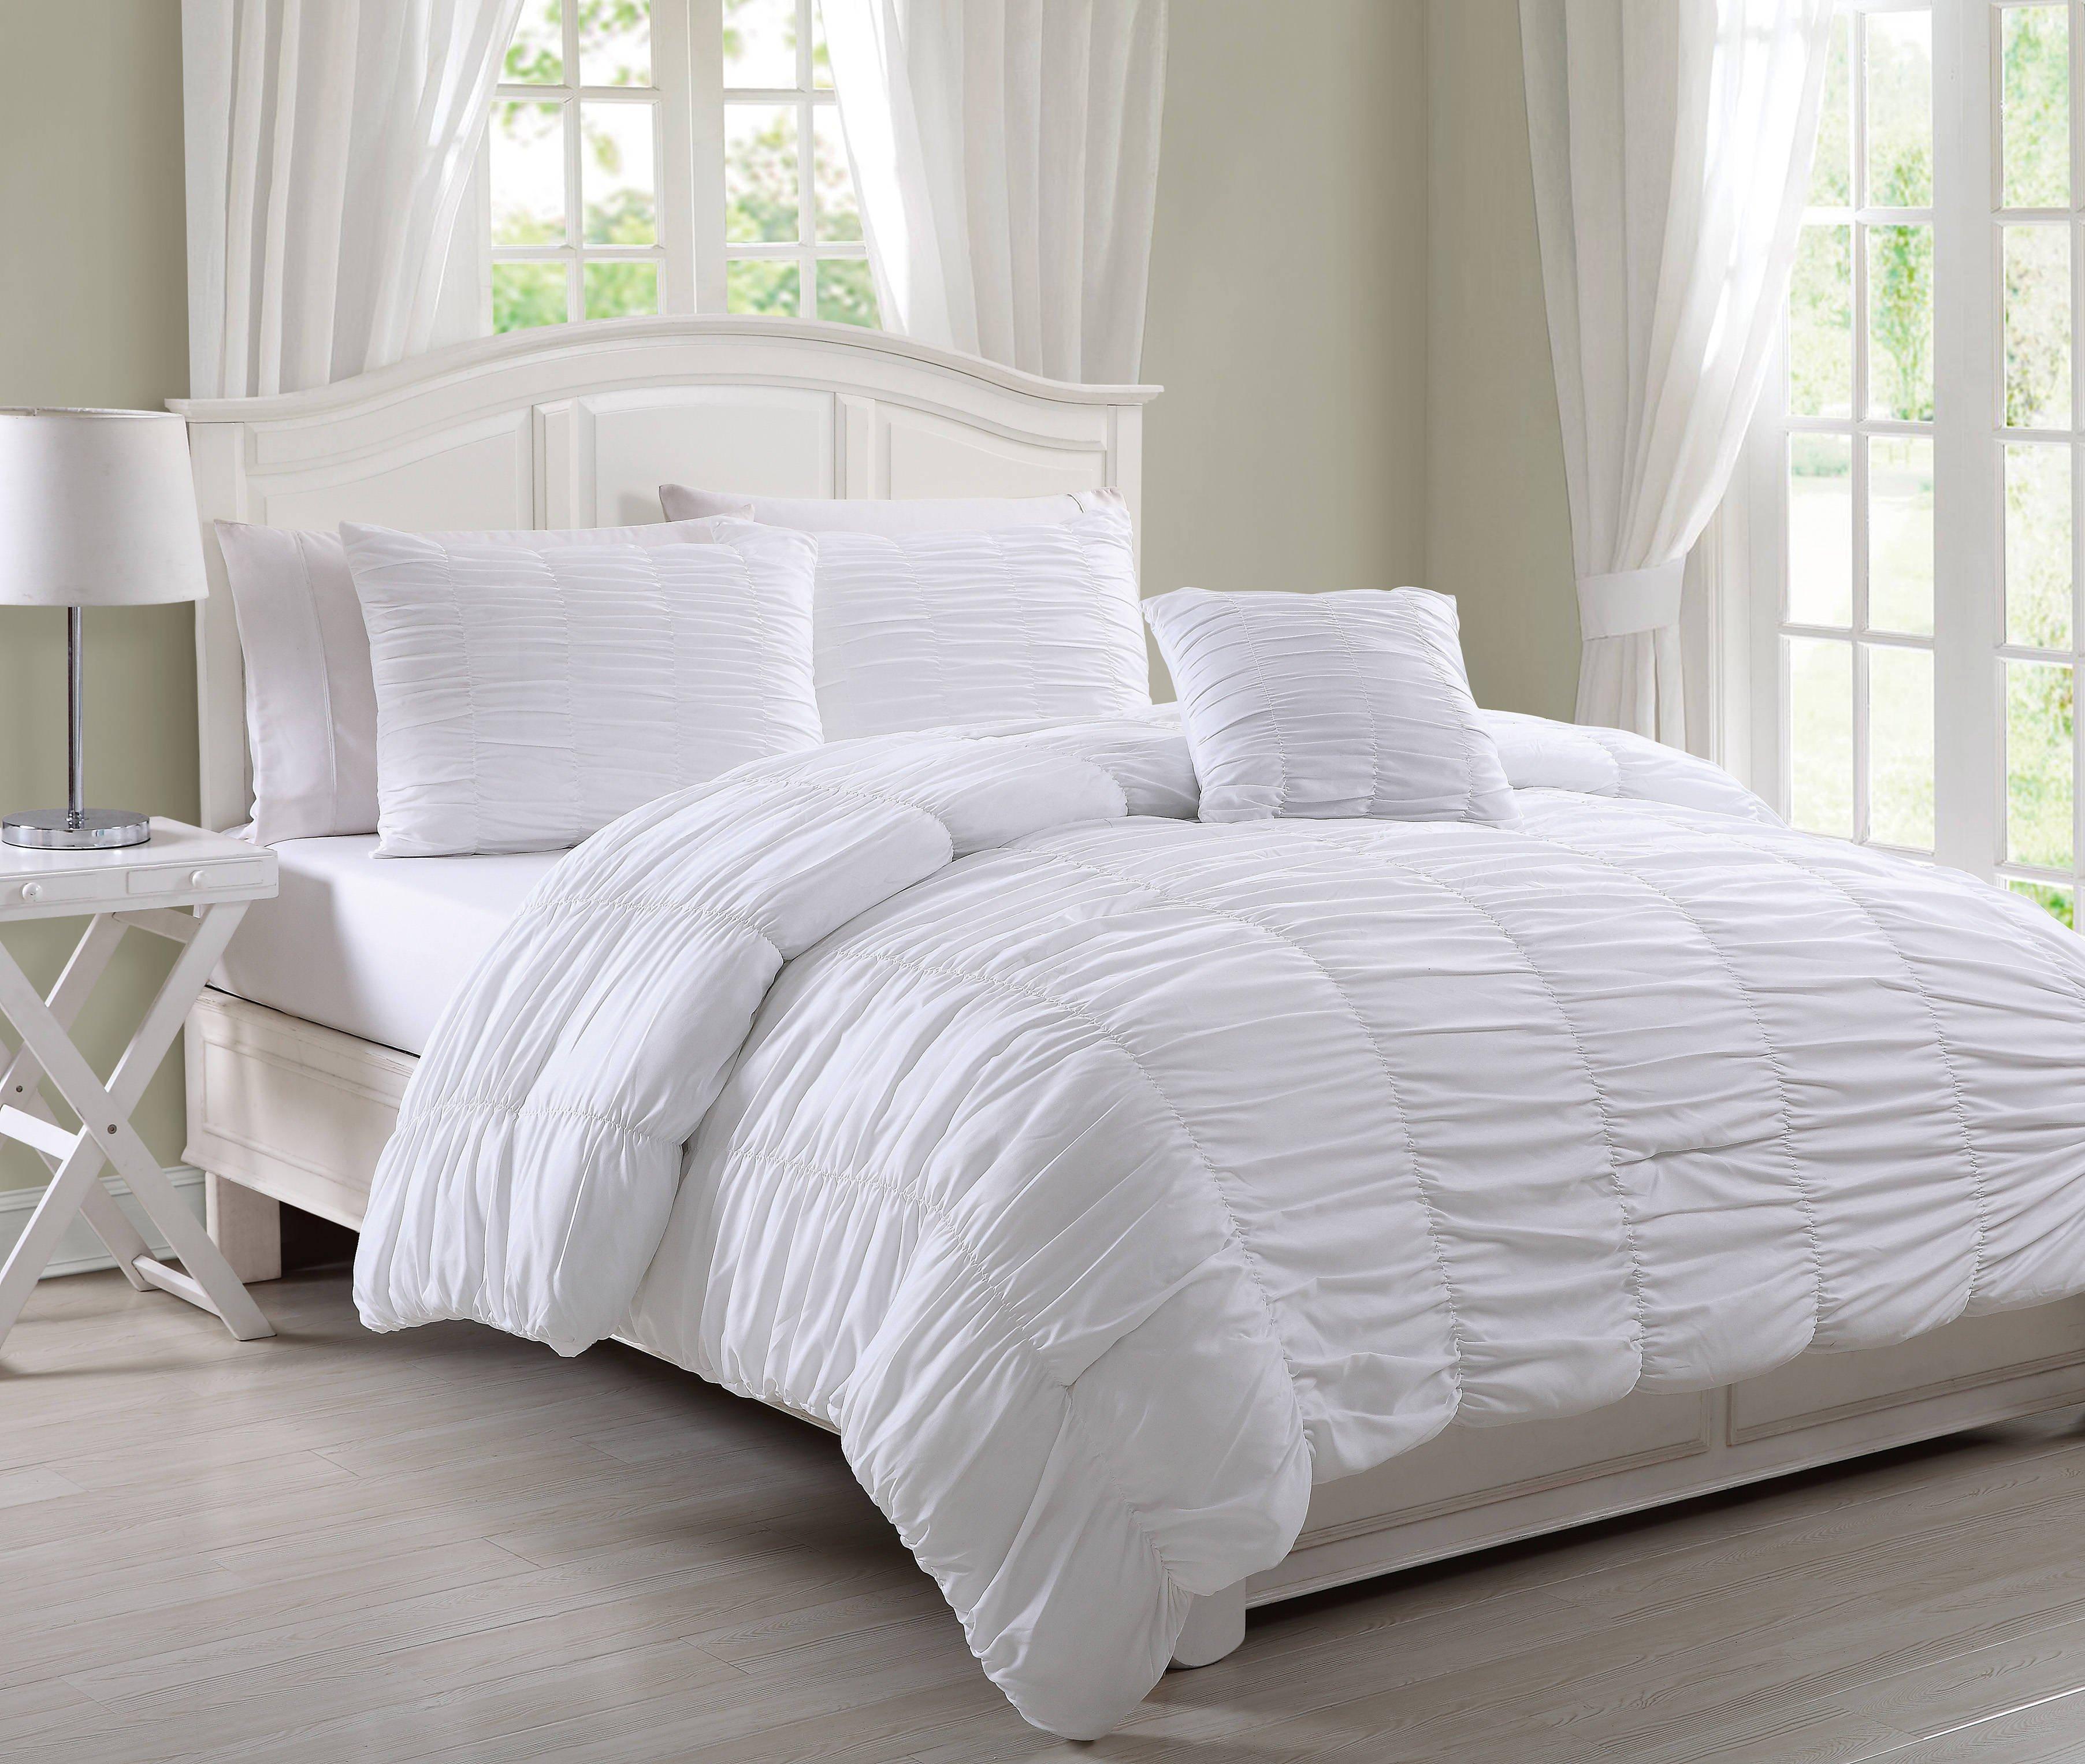 Twin Nikki Collection Comforter Set - White | Burkes Outlet